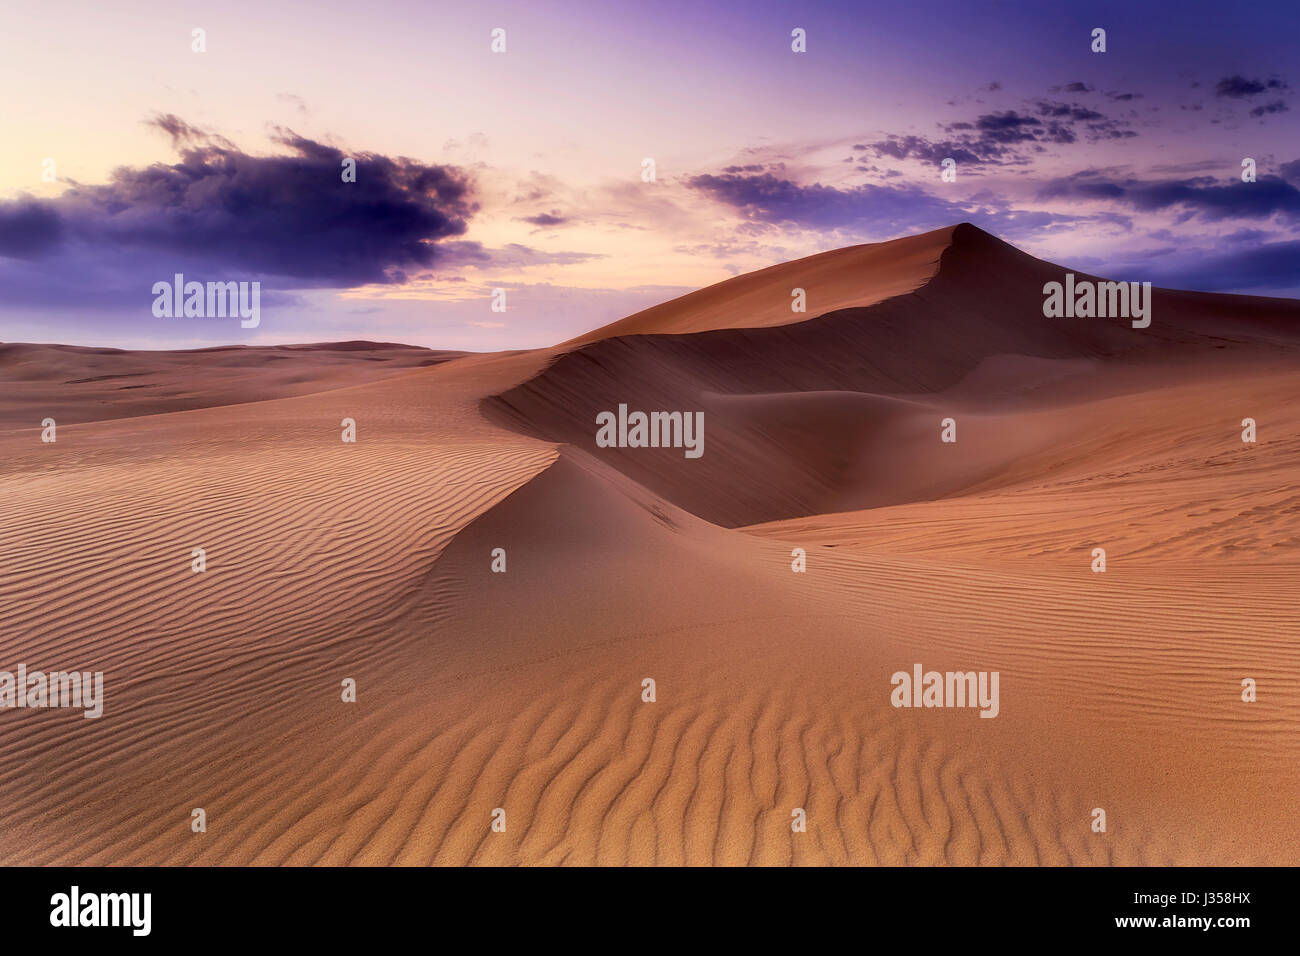 Lifeless sand desert with chain of dunes at sunrise. Stockton beach sand dunes in NSW, Australia. Stock Photo